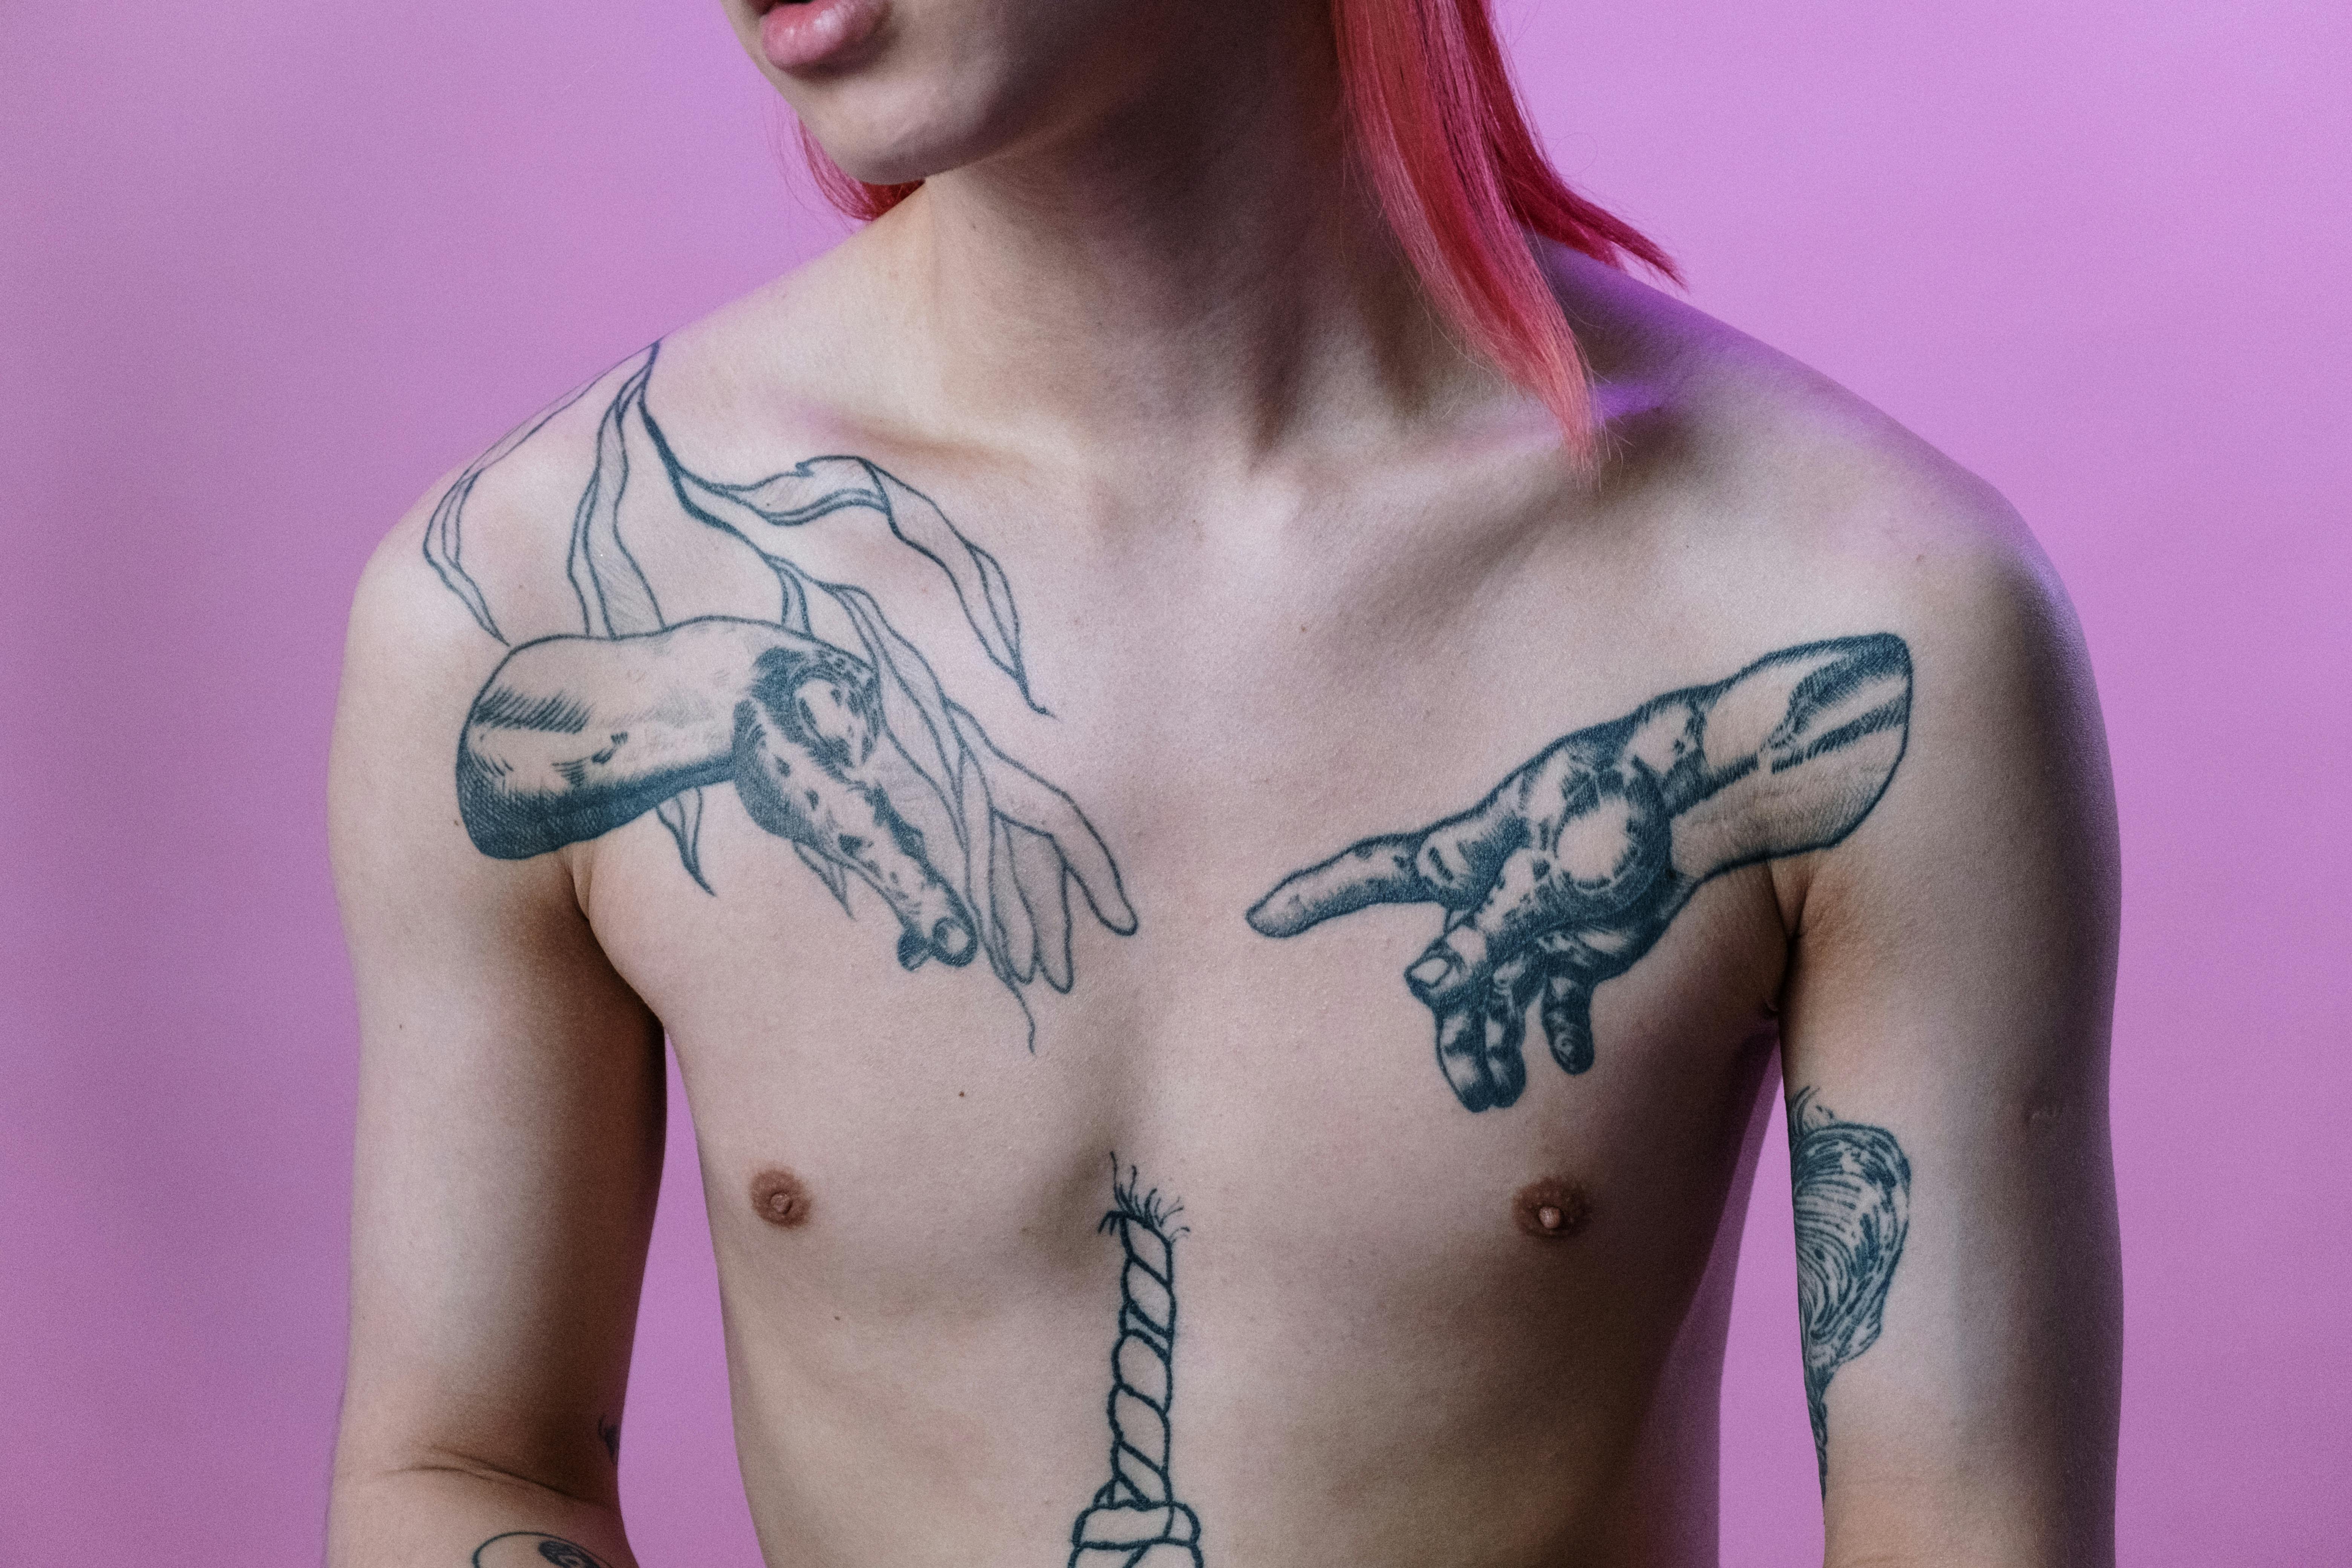 Stylish Black Man with Intricate Tattoos | MUSE AI